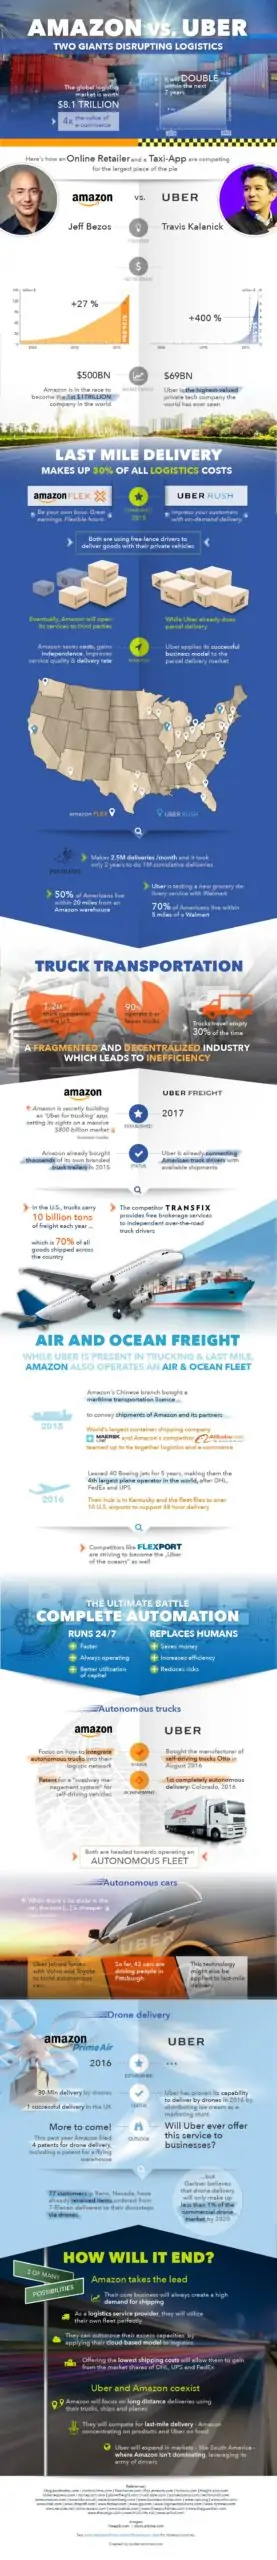 Amazon and Uber Impact on Logistics!